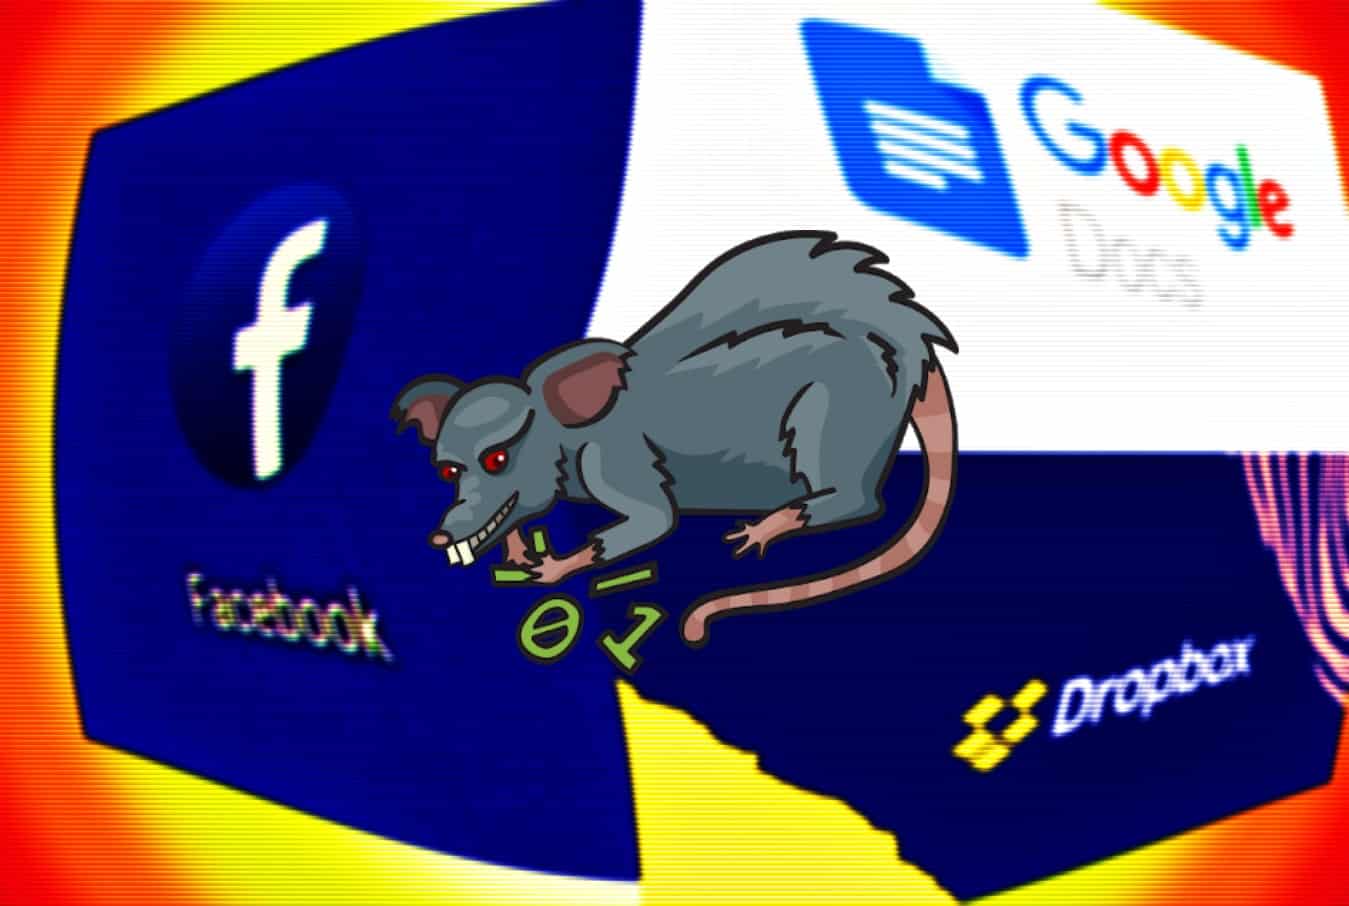 MoleRats targeting users via Facebook, Dropbox, Google Docs